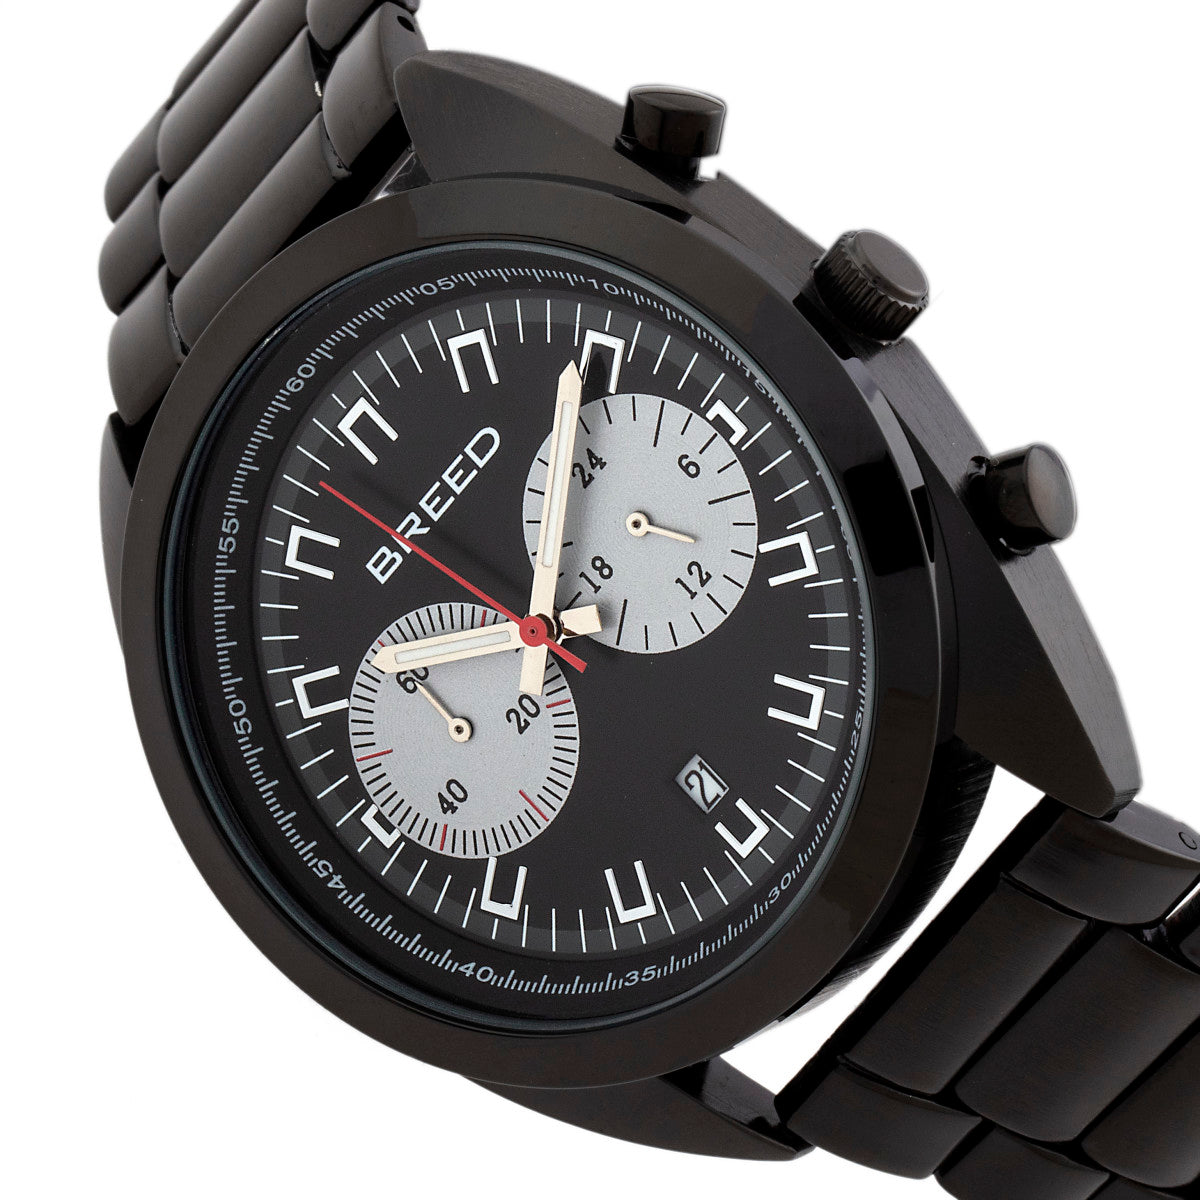 Breed Racer Chronograph Bracelet Watch w/Date - Black - BRD8503